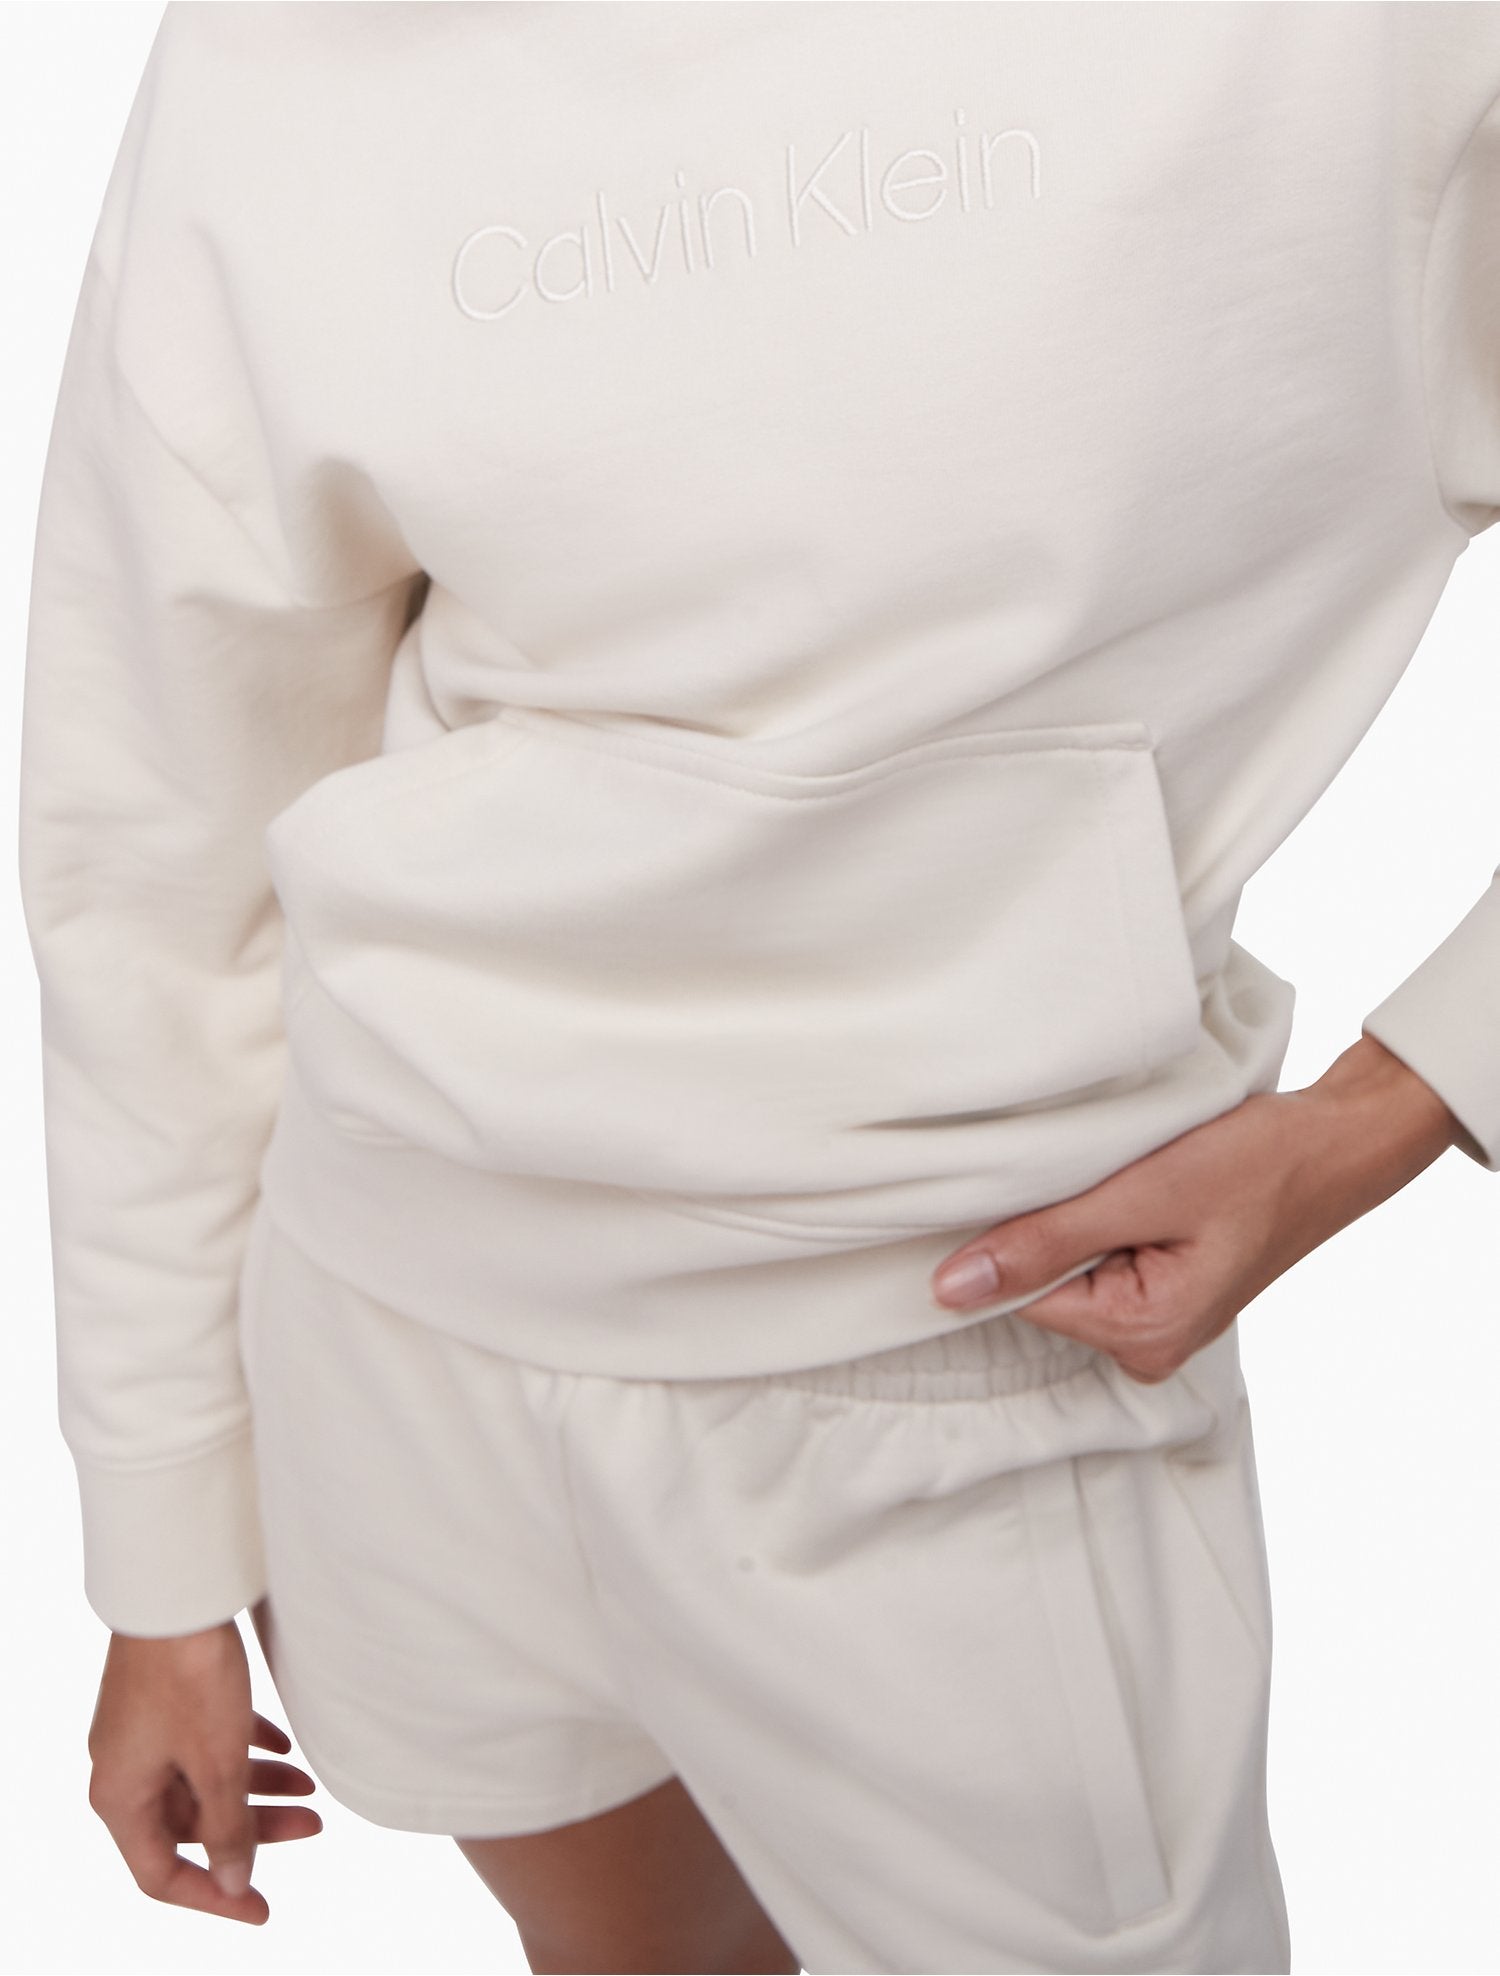 Calvin Klein Relaxed Fit Standard Logo Hoodie - Women